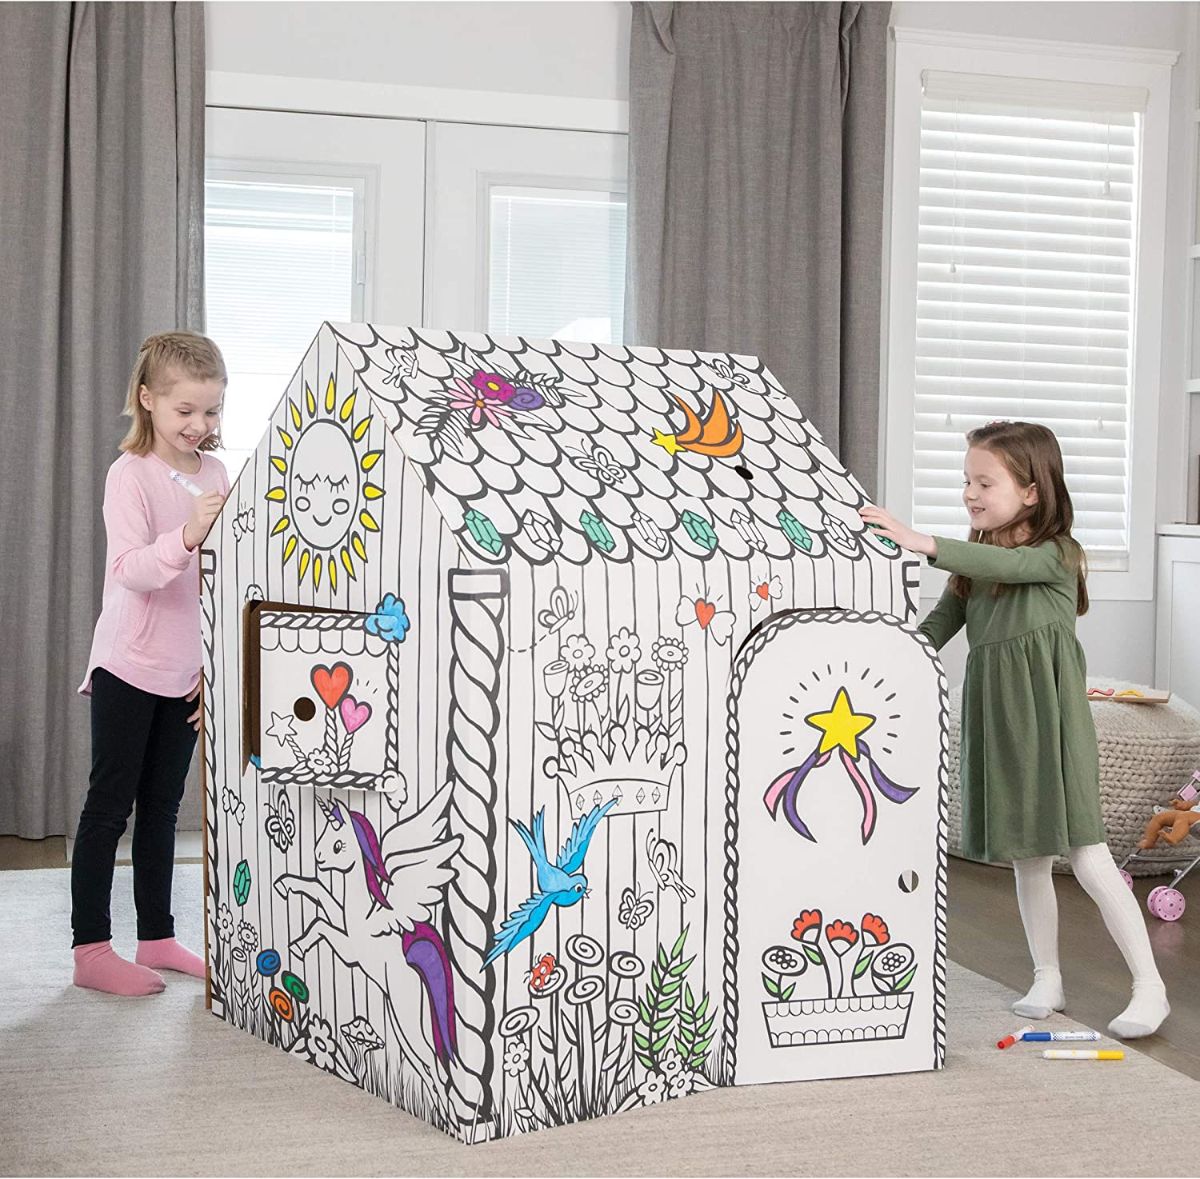 Two girls playing at unicorn cardboard house.